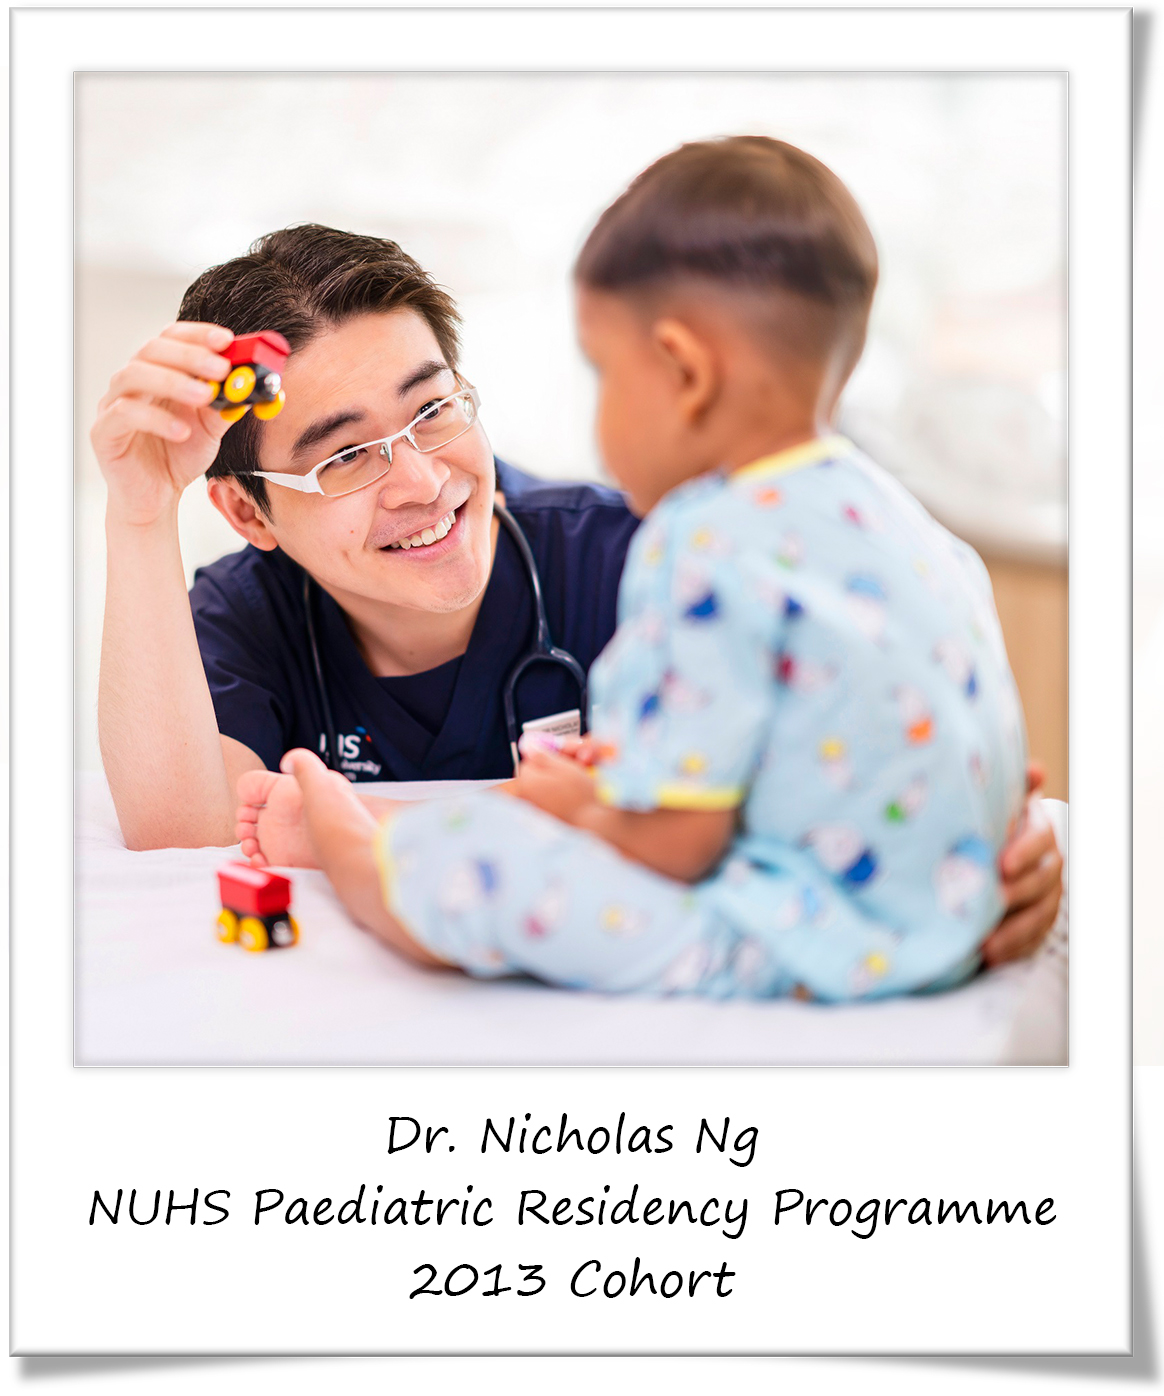 Dr Nicholas Ng, NUHS Paediatrics Testimonial on Residency Programme, 2013 Cohort